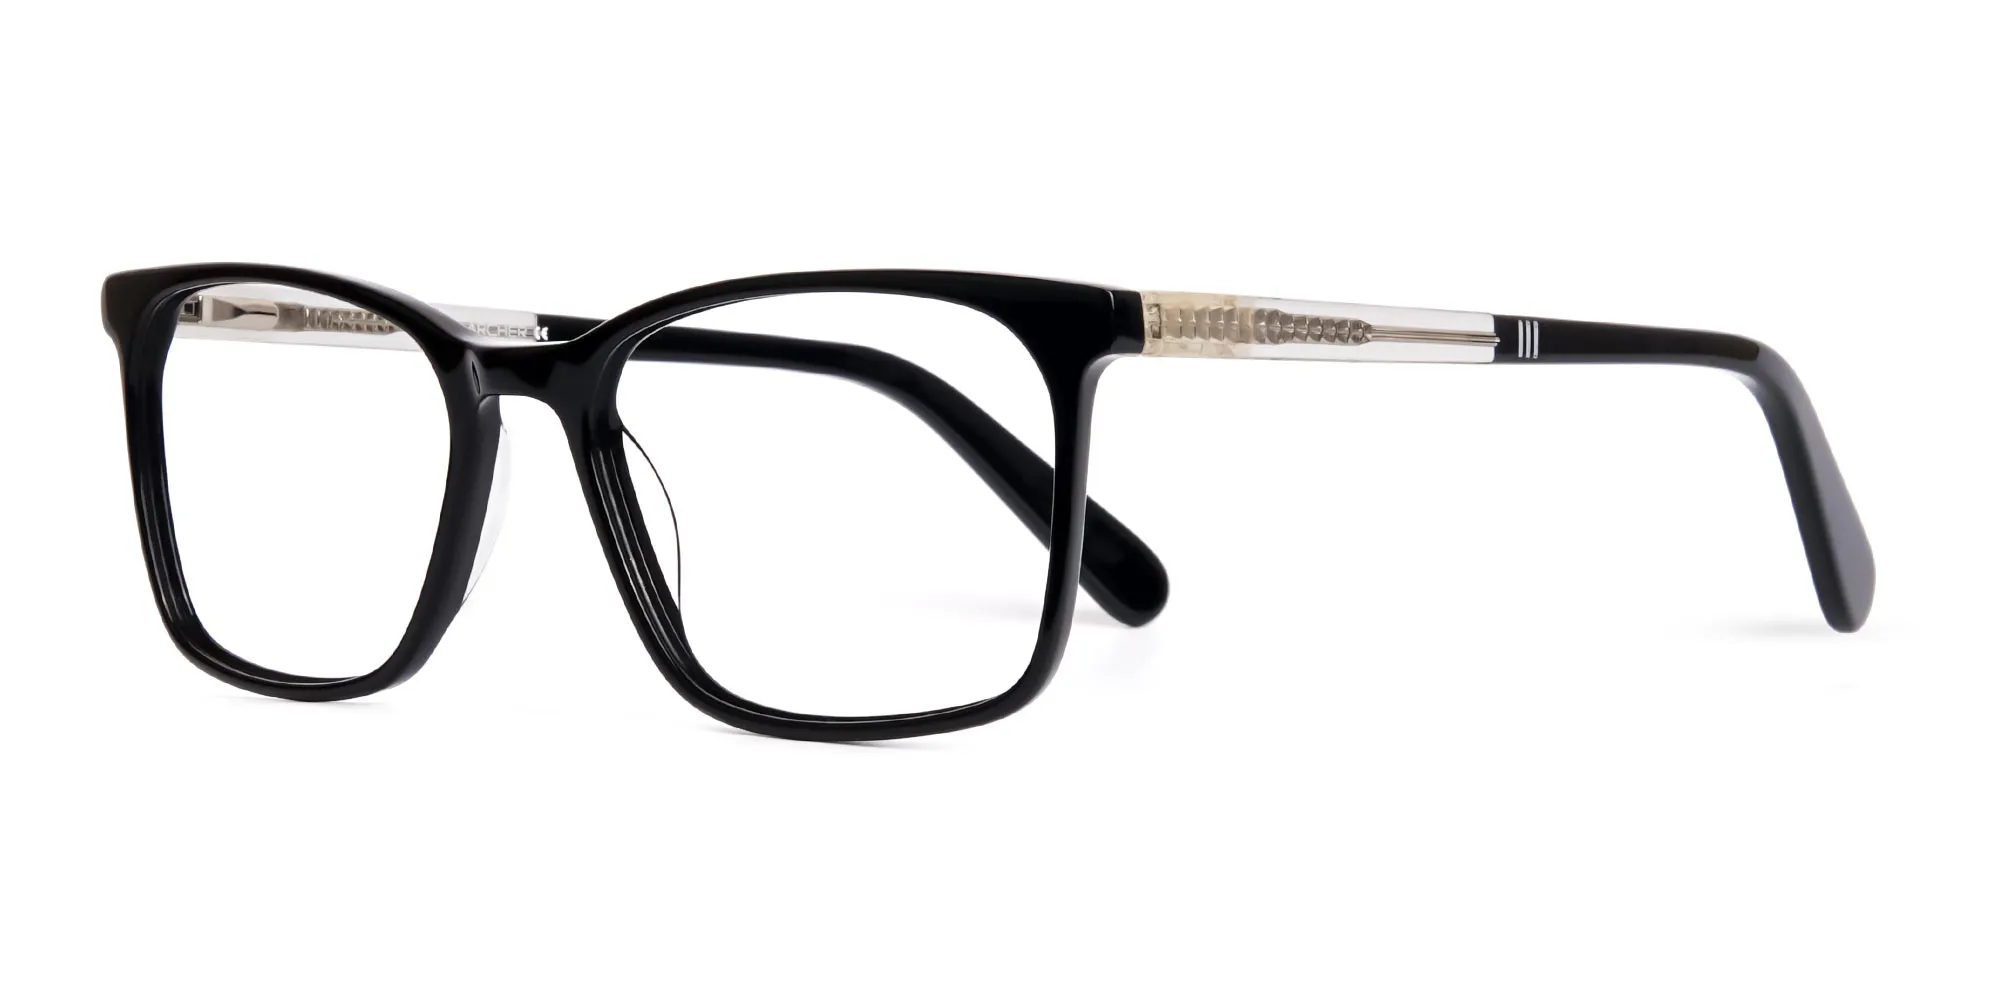 black and transparent rectangular glasses frames-2